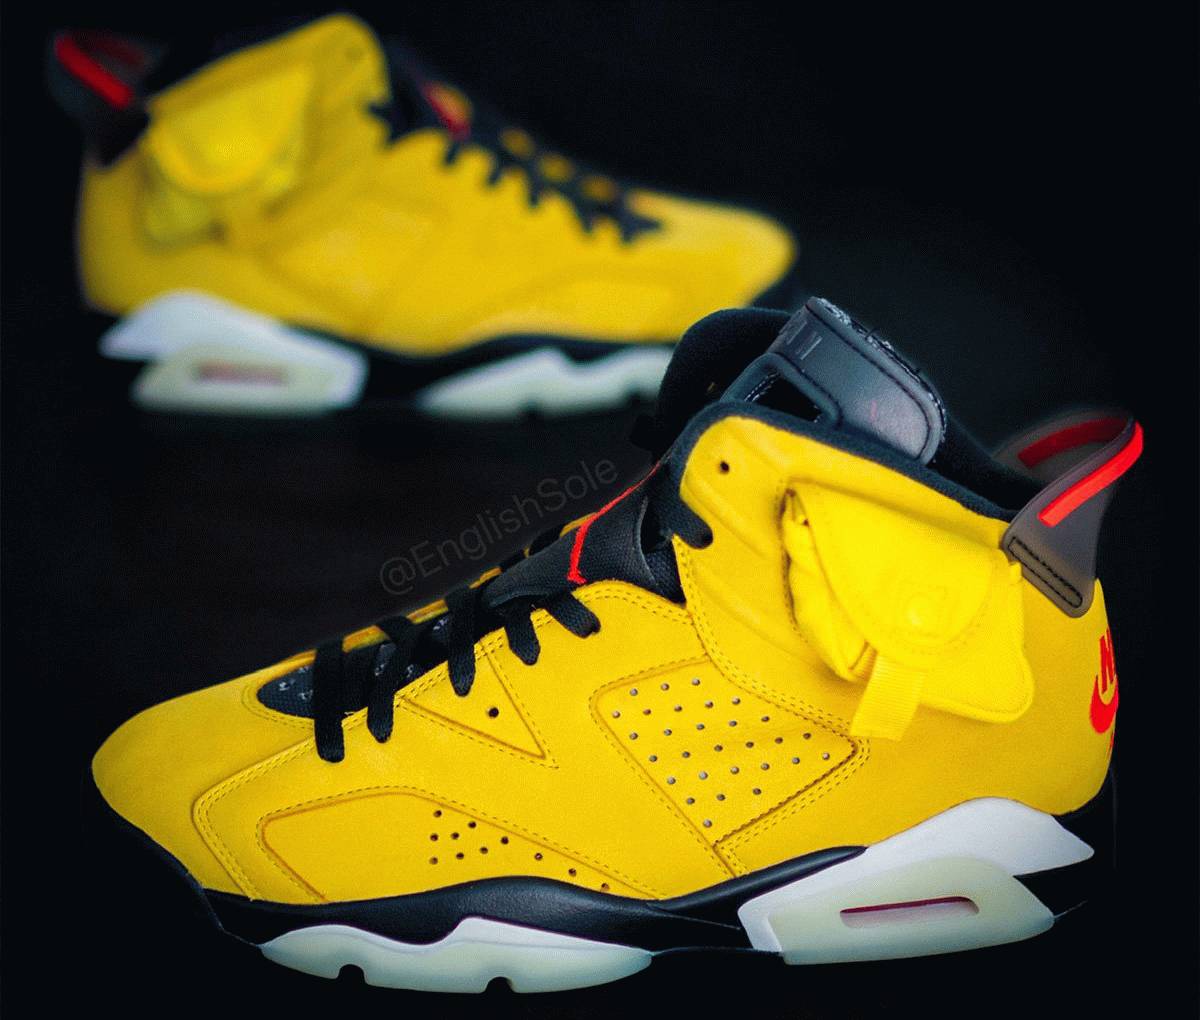 Travis Scott x Air Jordan 6 Yellow sneaker